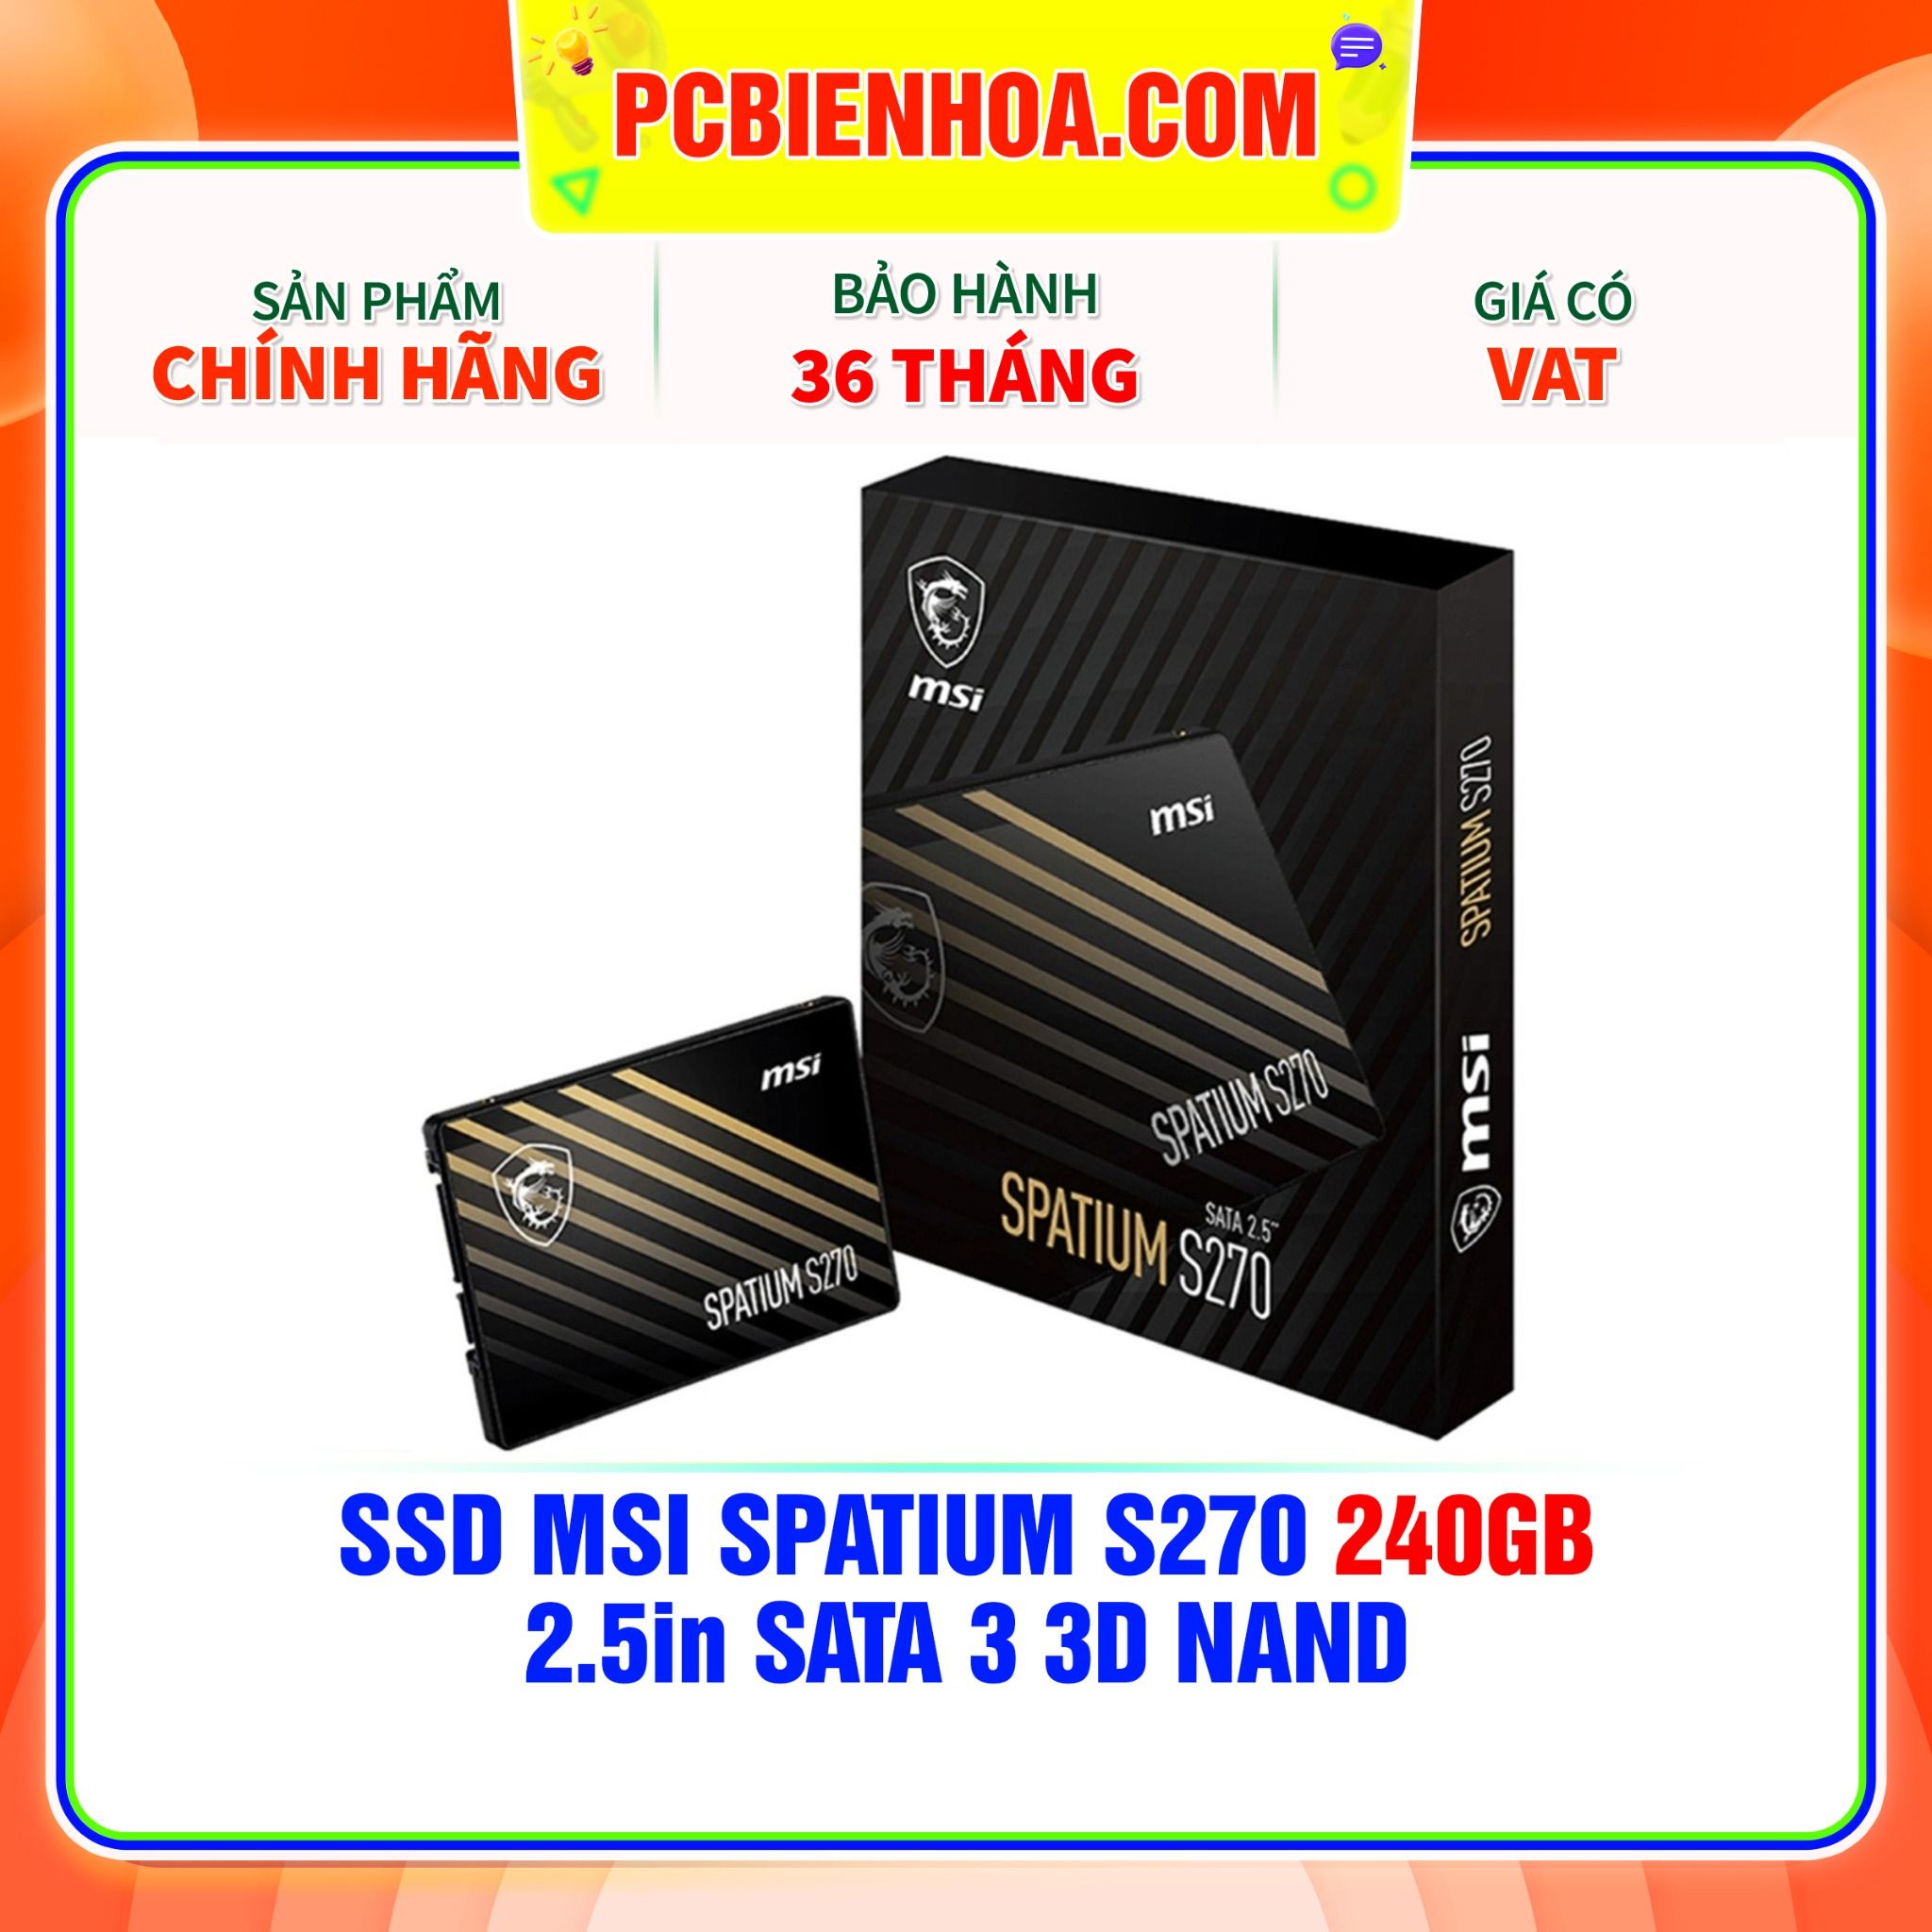  SSD MSI SPATIUM S270 240GB 2.5in SATA III 3D NAND 